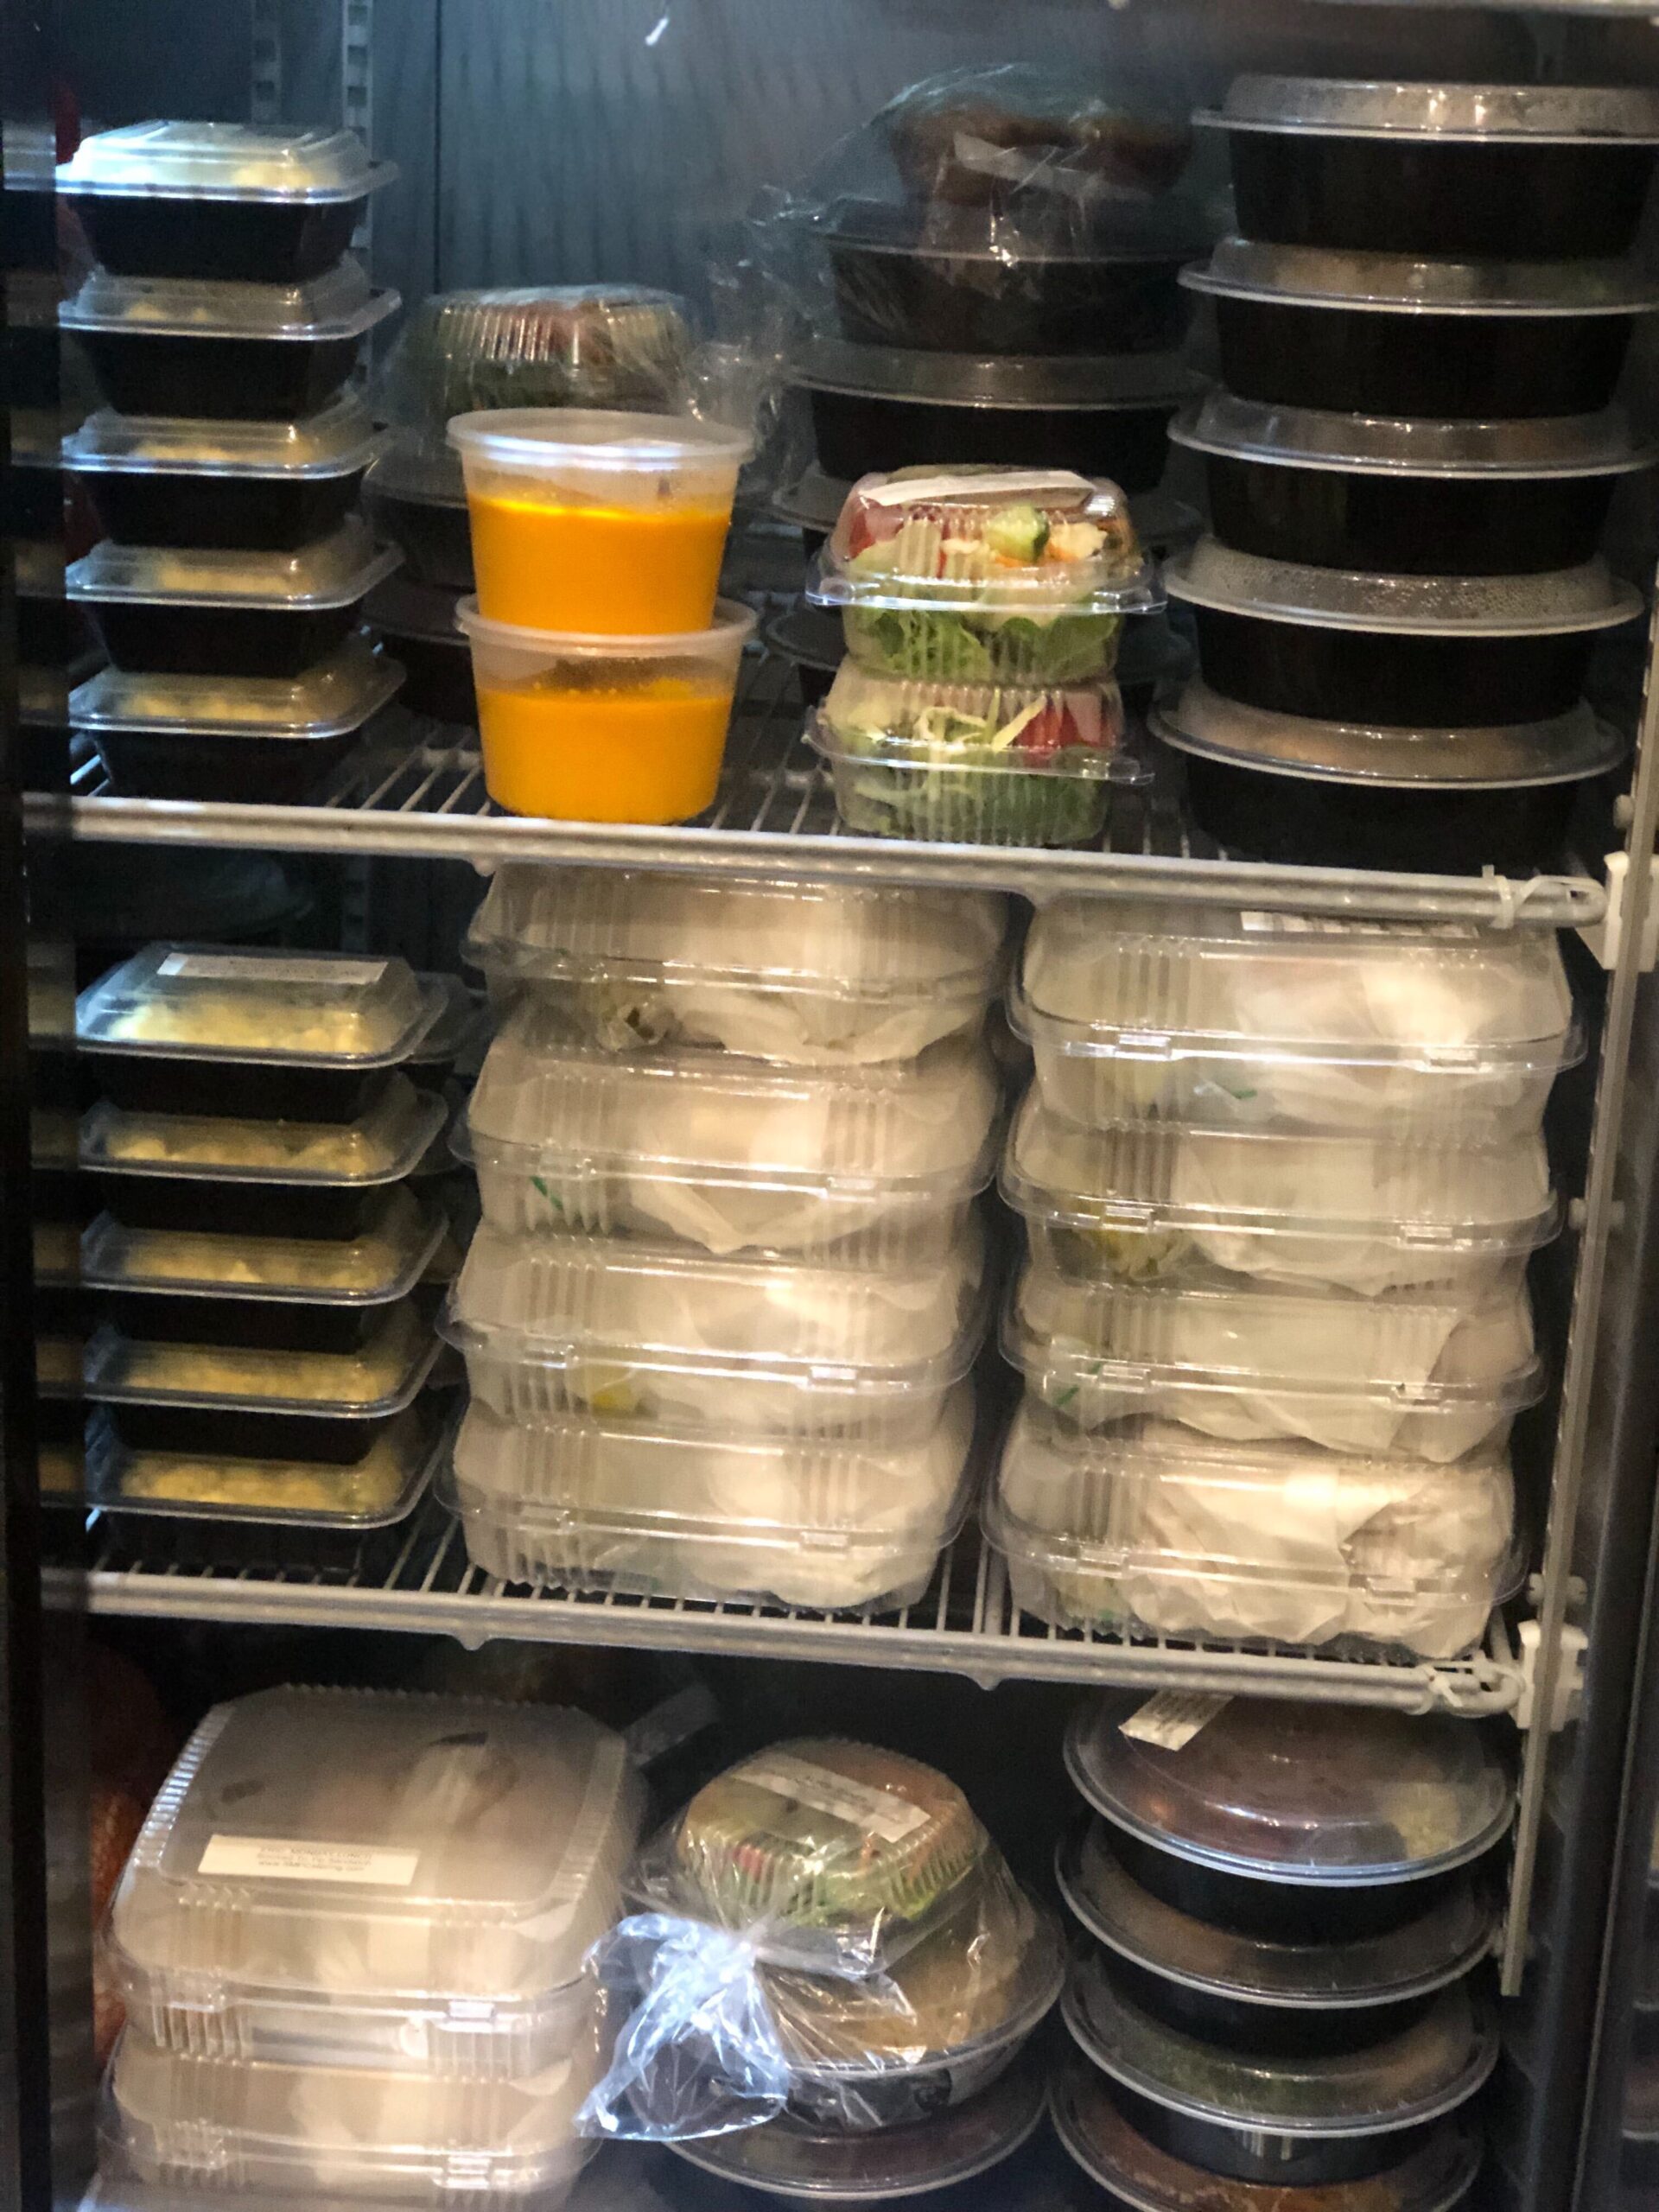 Outpatient meals stocked fridge